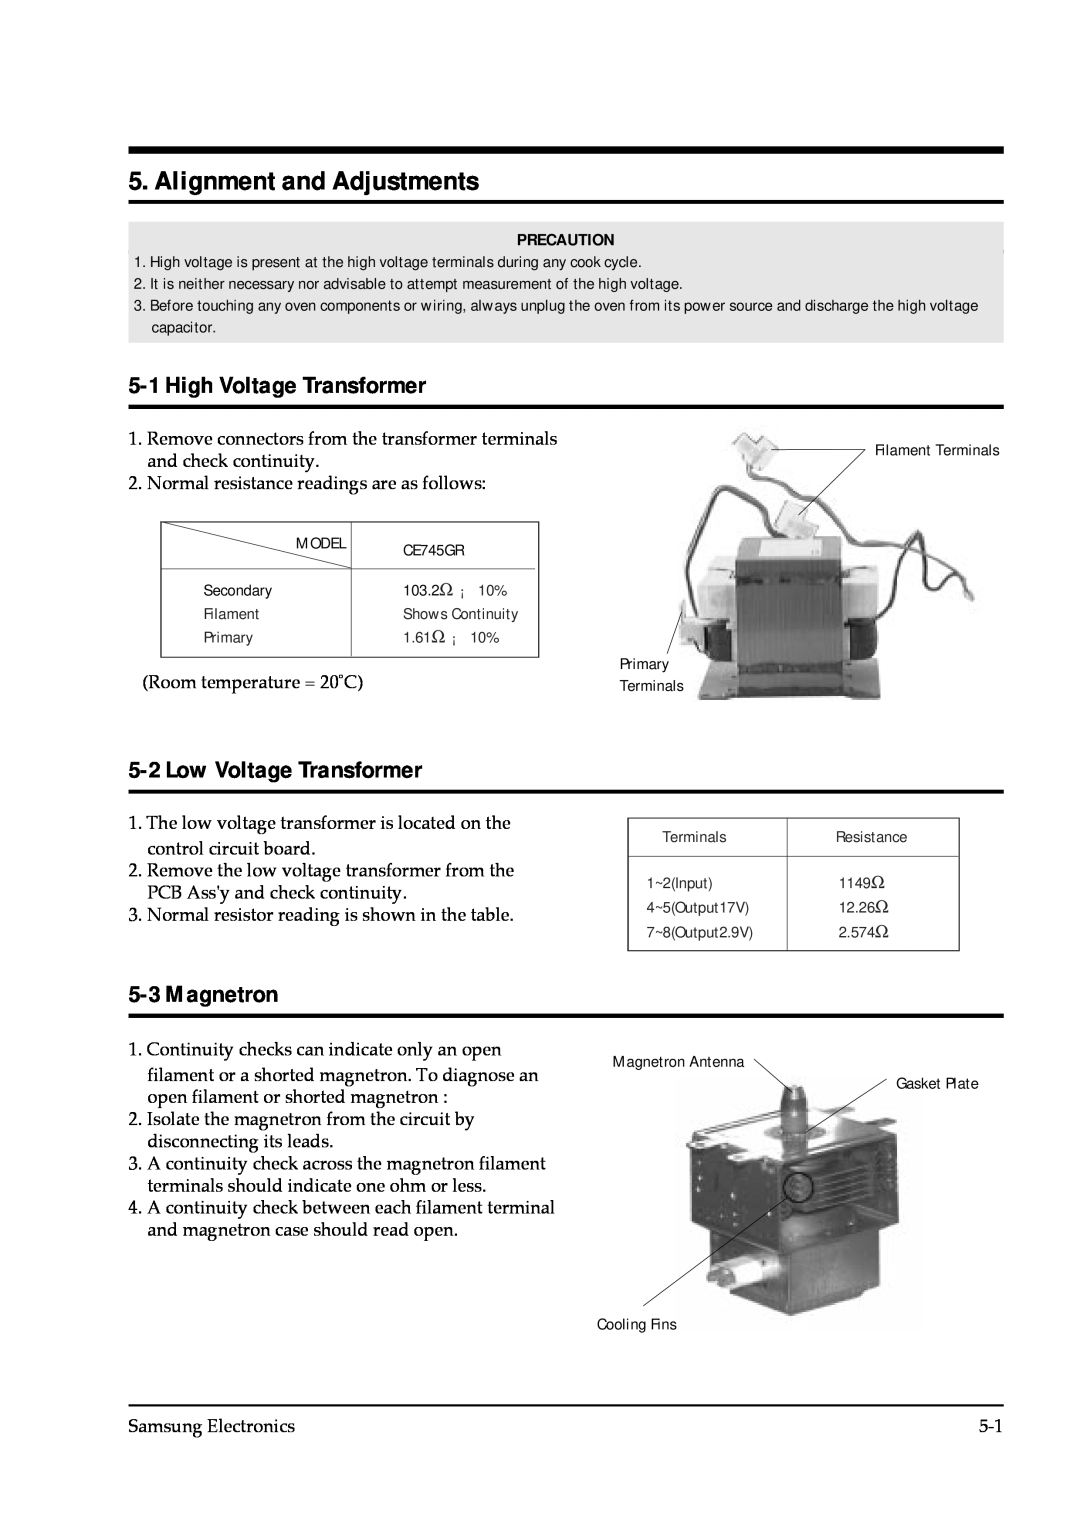 Samsung CE745GR service manual Alignment and Adjustments, High Voltage Transformer, Low Voltage Transformer, Magnetron 